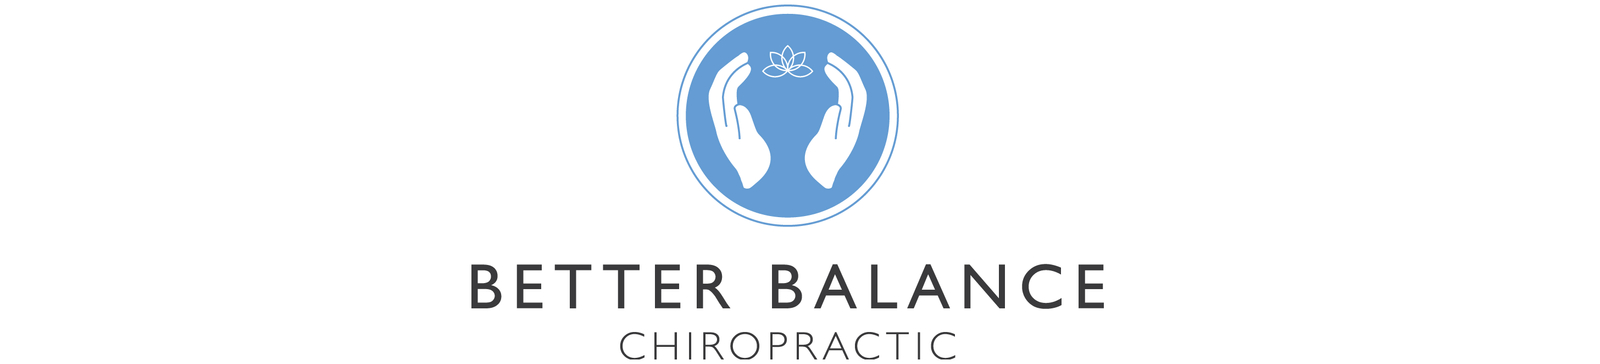 Better Balance Chiropractic